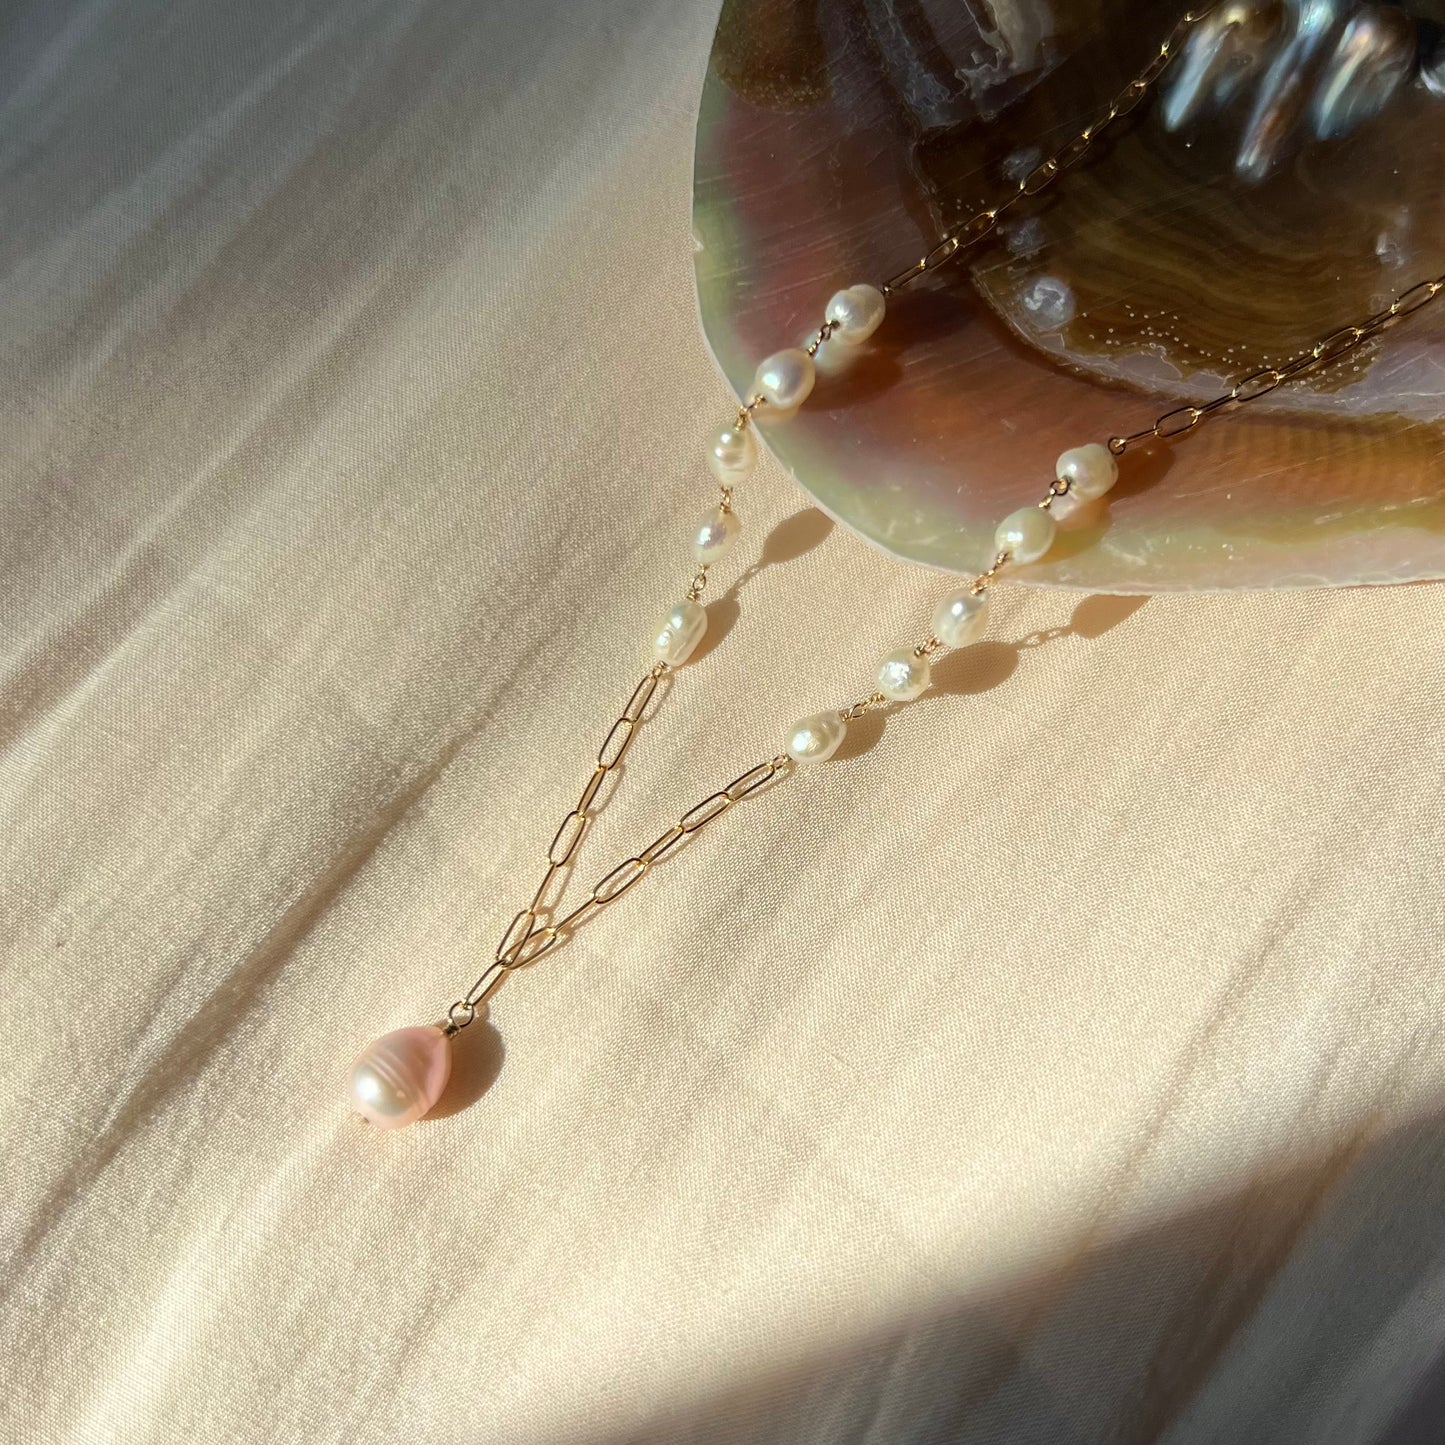 Blush Pearl Drop Necklace